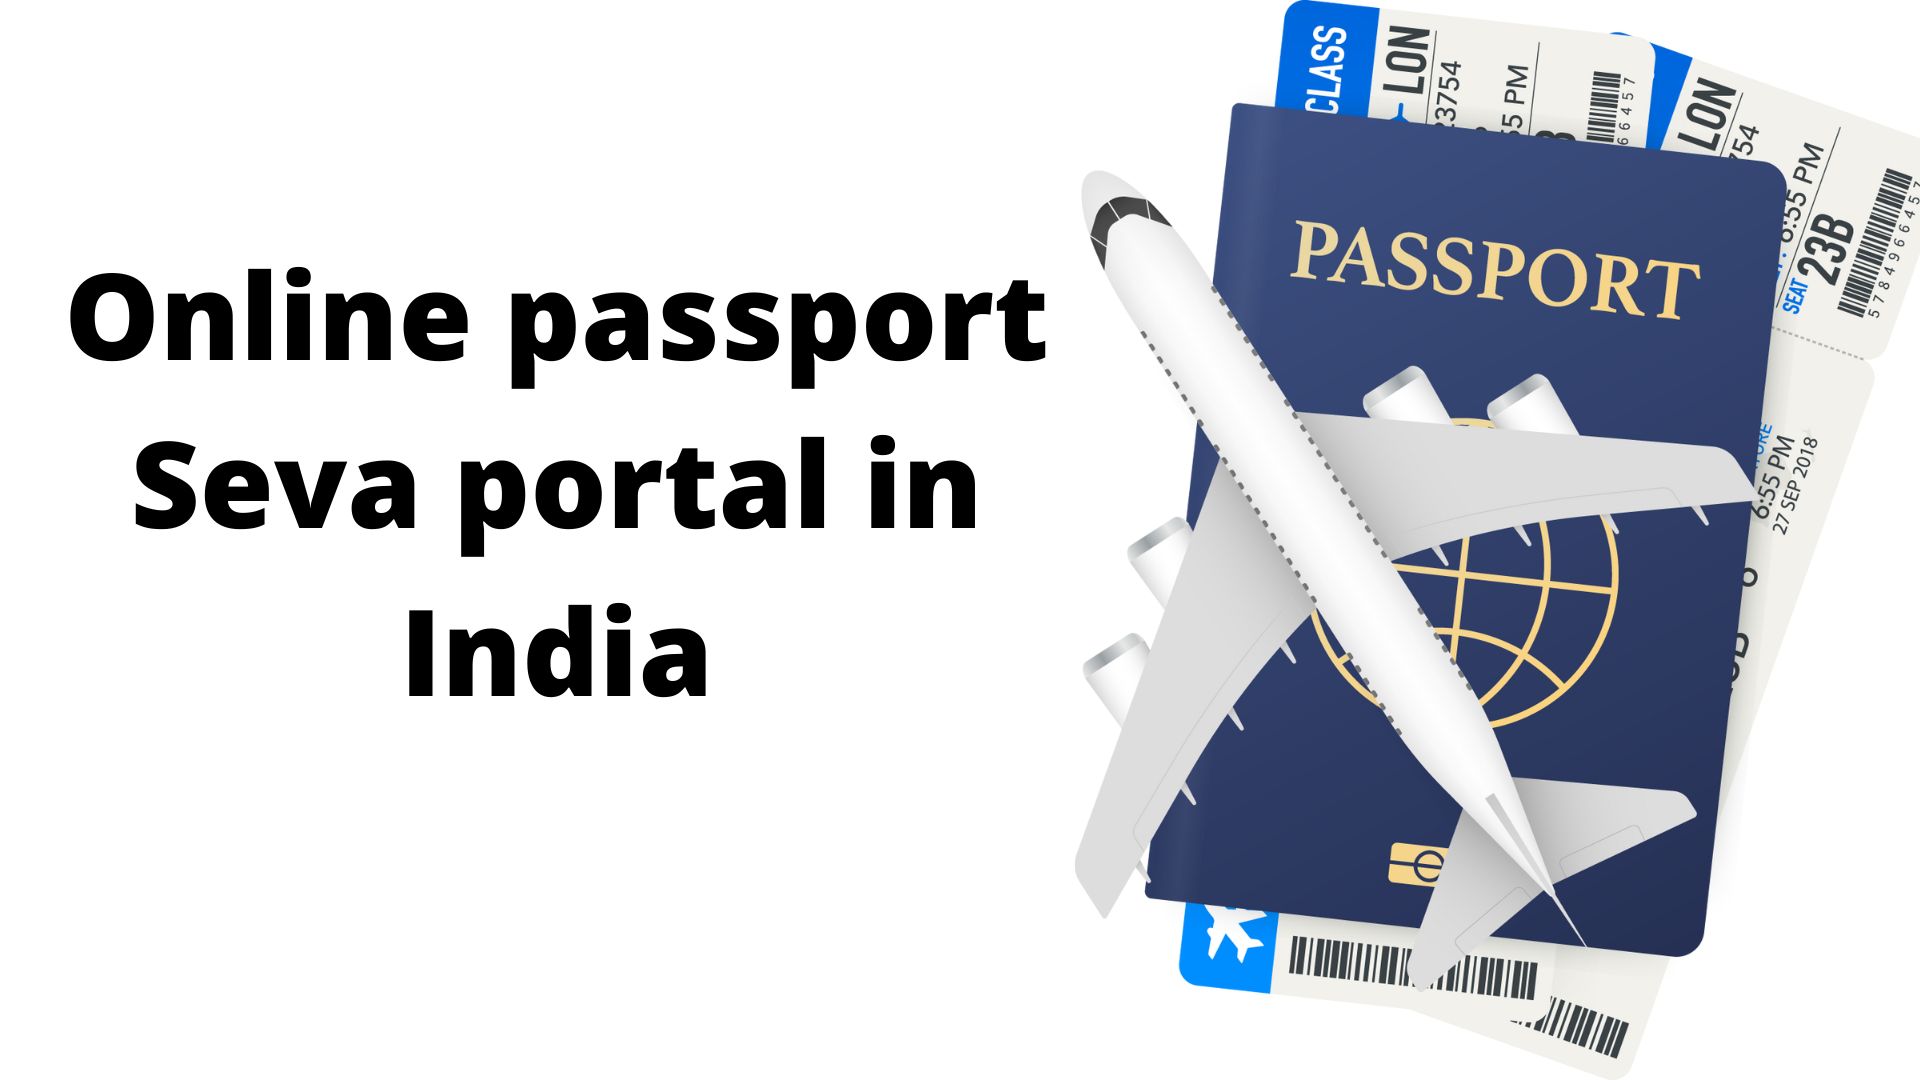 On-line passport Seva portal in India